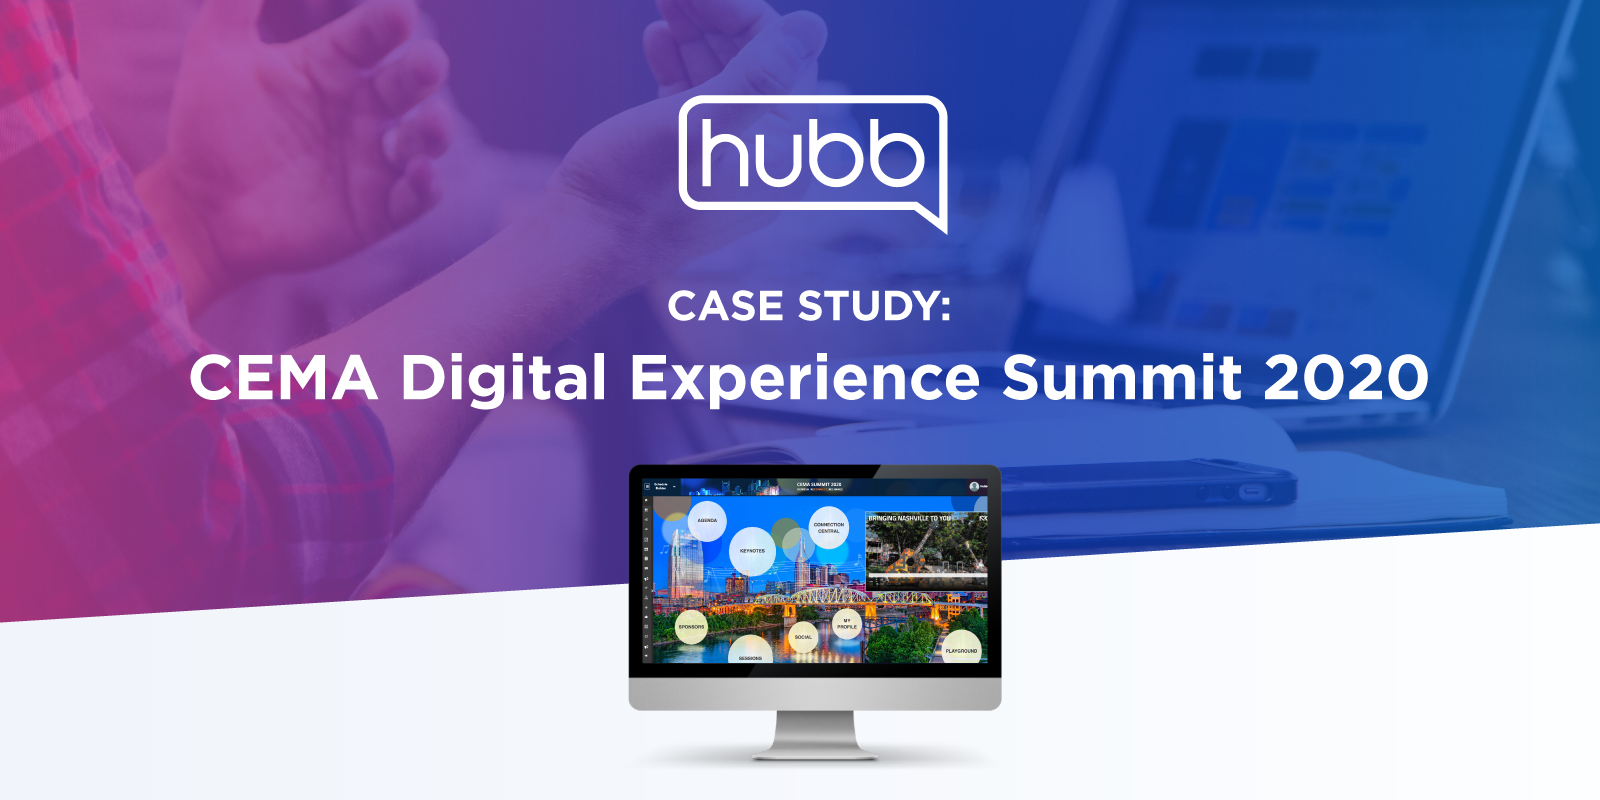 Case Study: CEMA Digital Experience Summit 2020